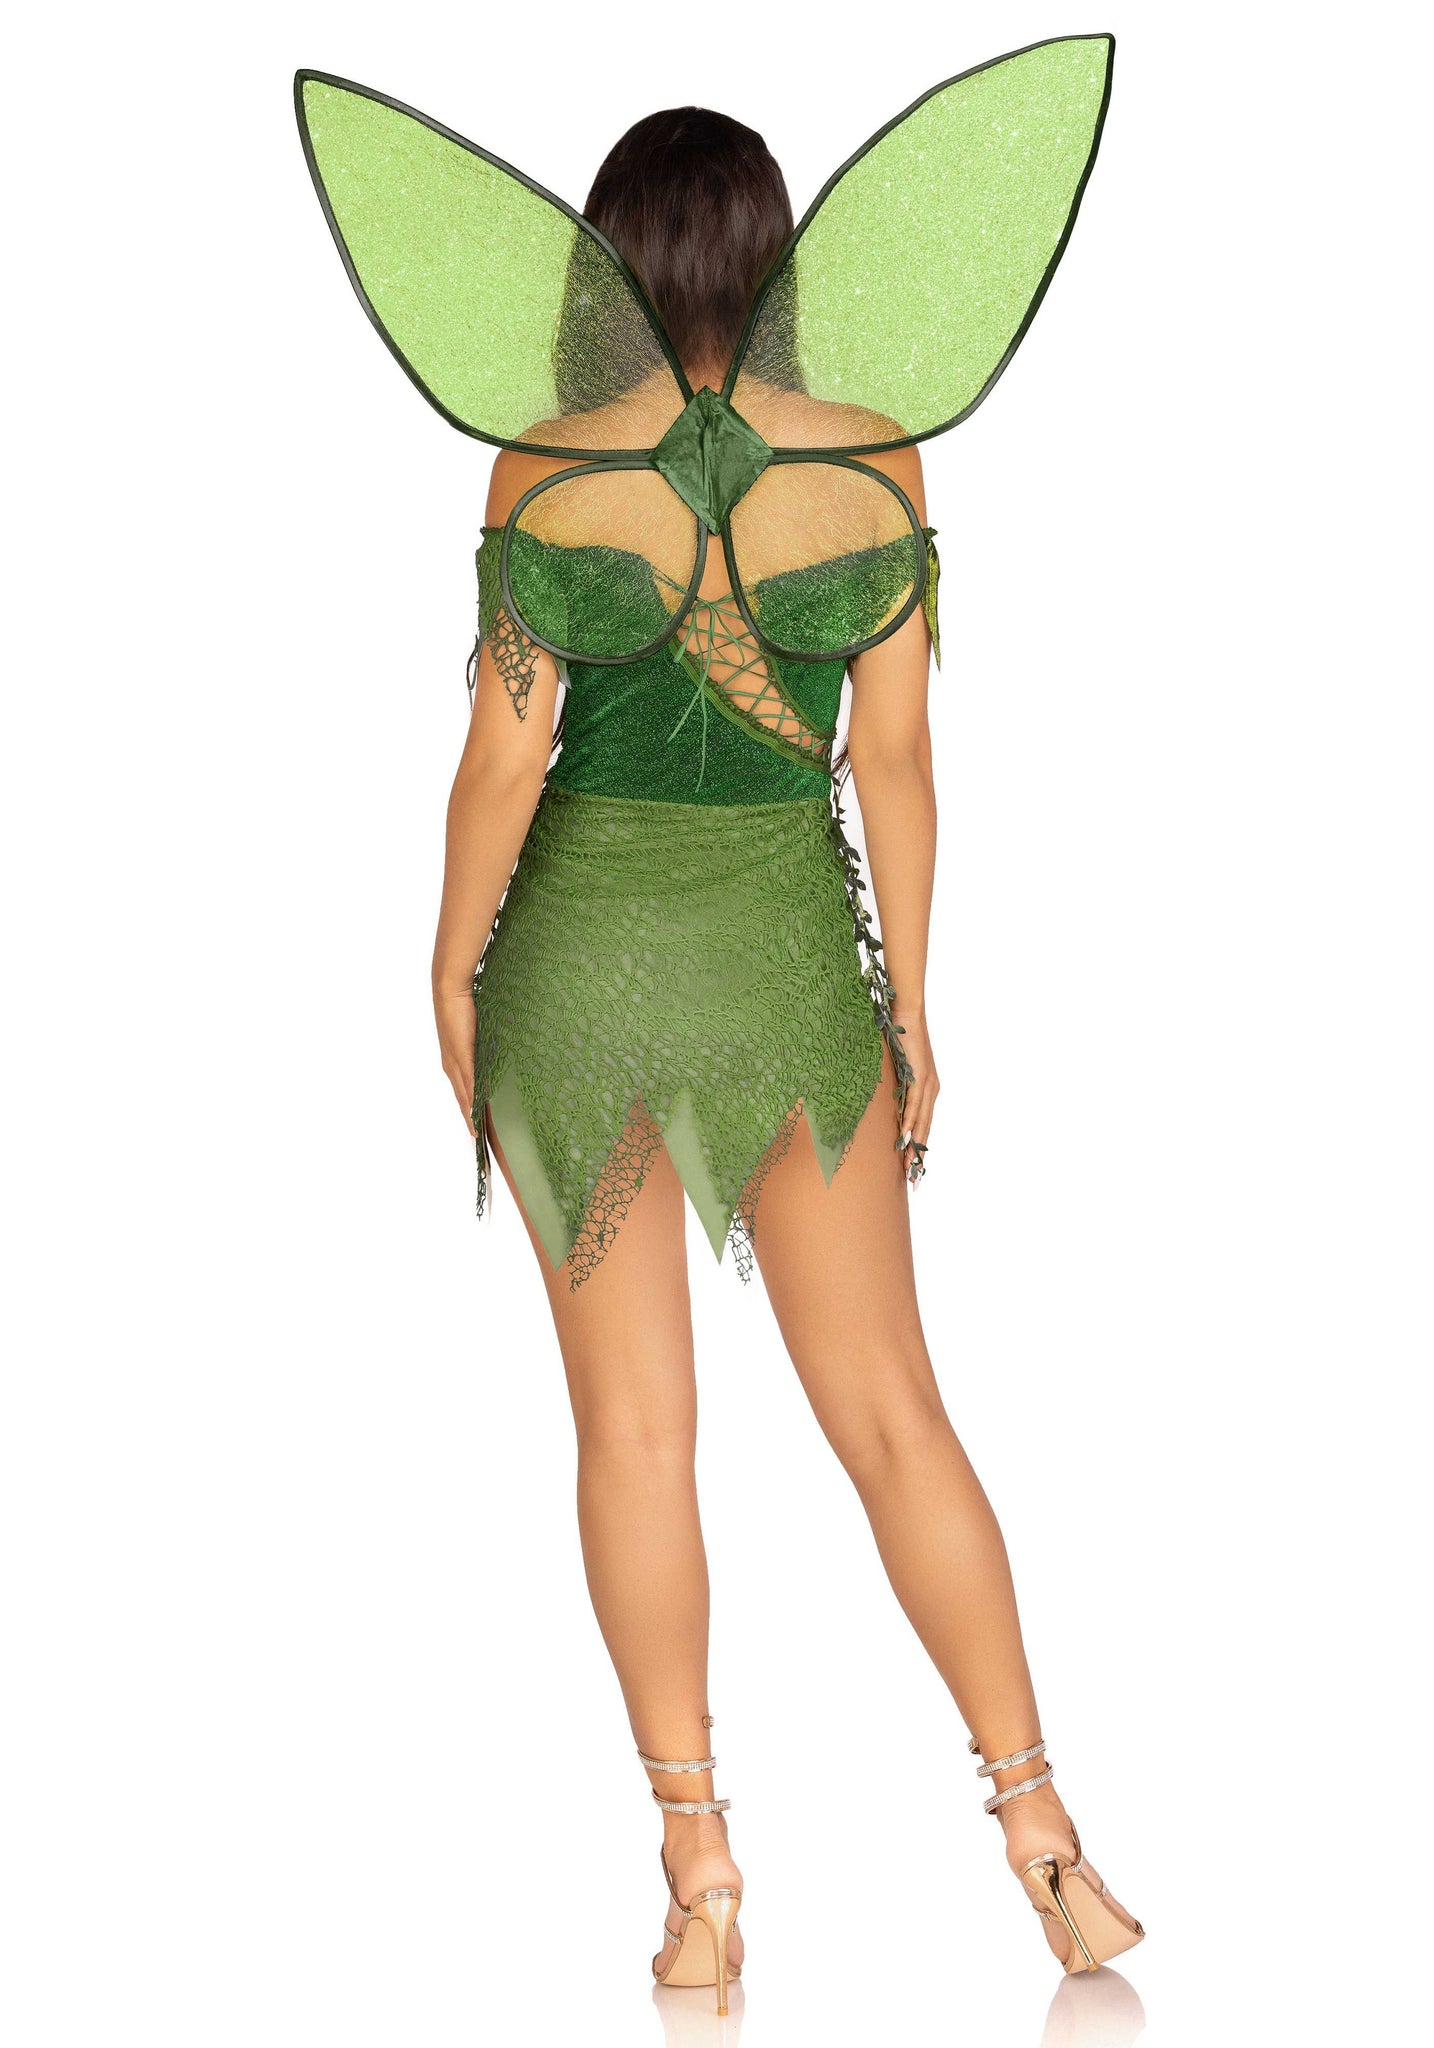 sexy fairy costume for halloween